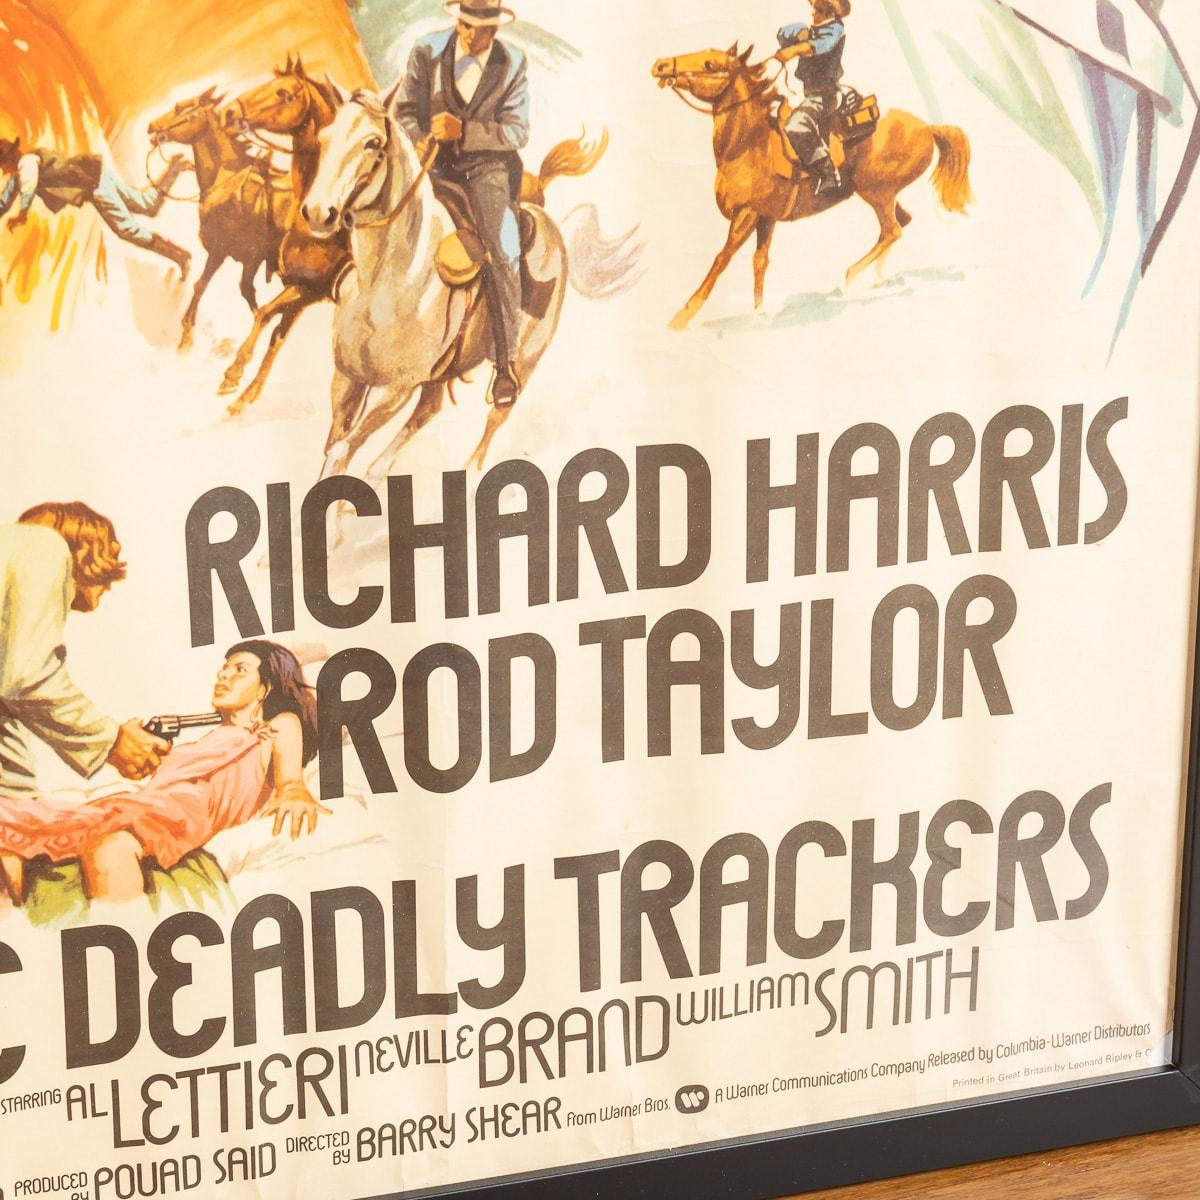 Original British Quad Black Belt Jones / Deadly Trackers Movie Poster, c.1973 For Sale 4